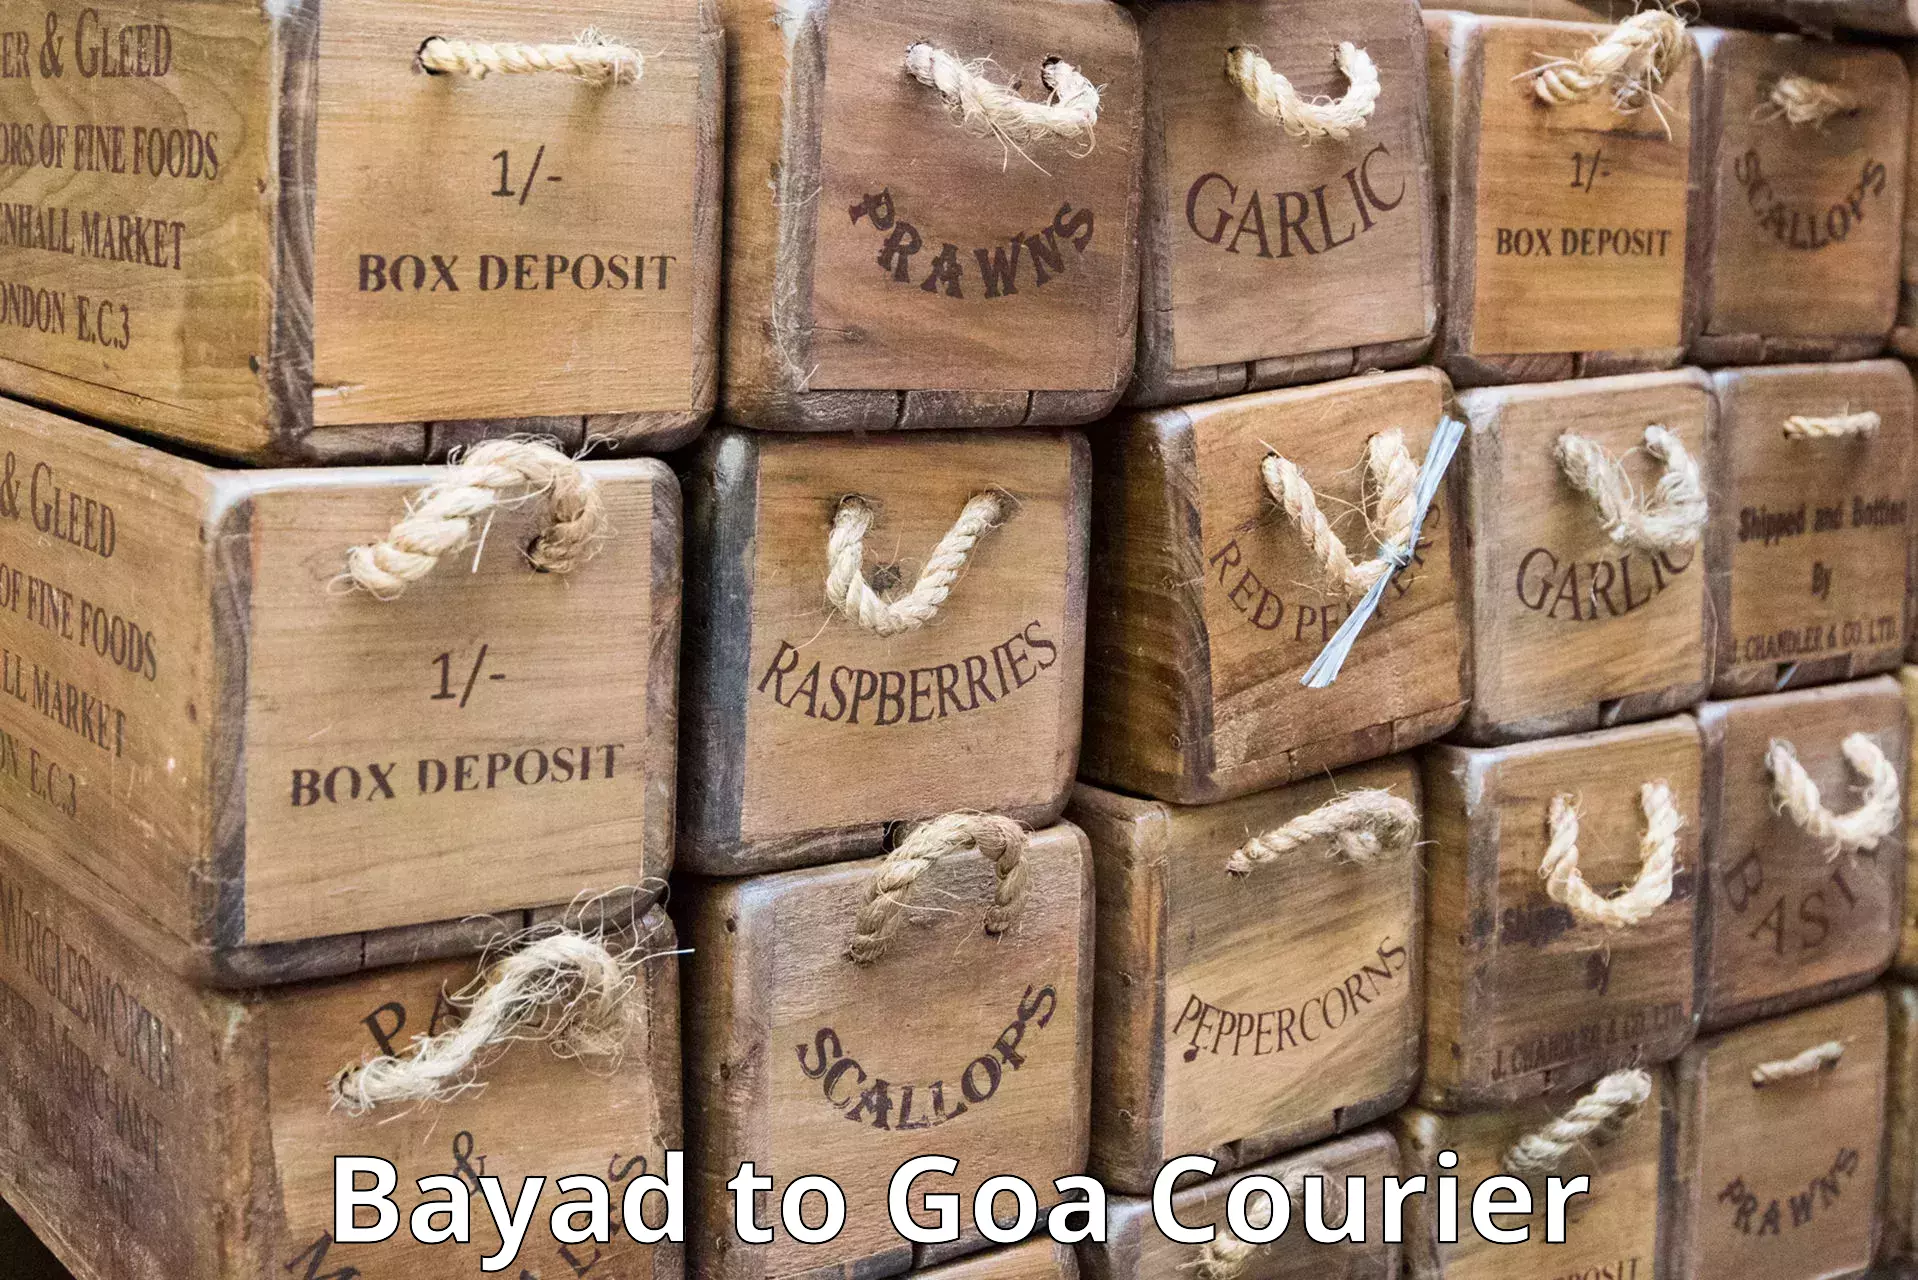 Courier service partnerships Bayad to Goa